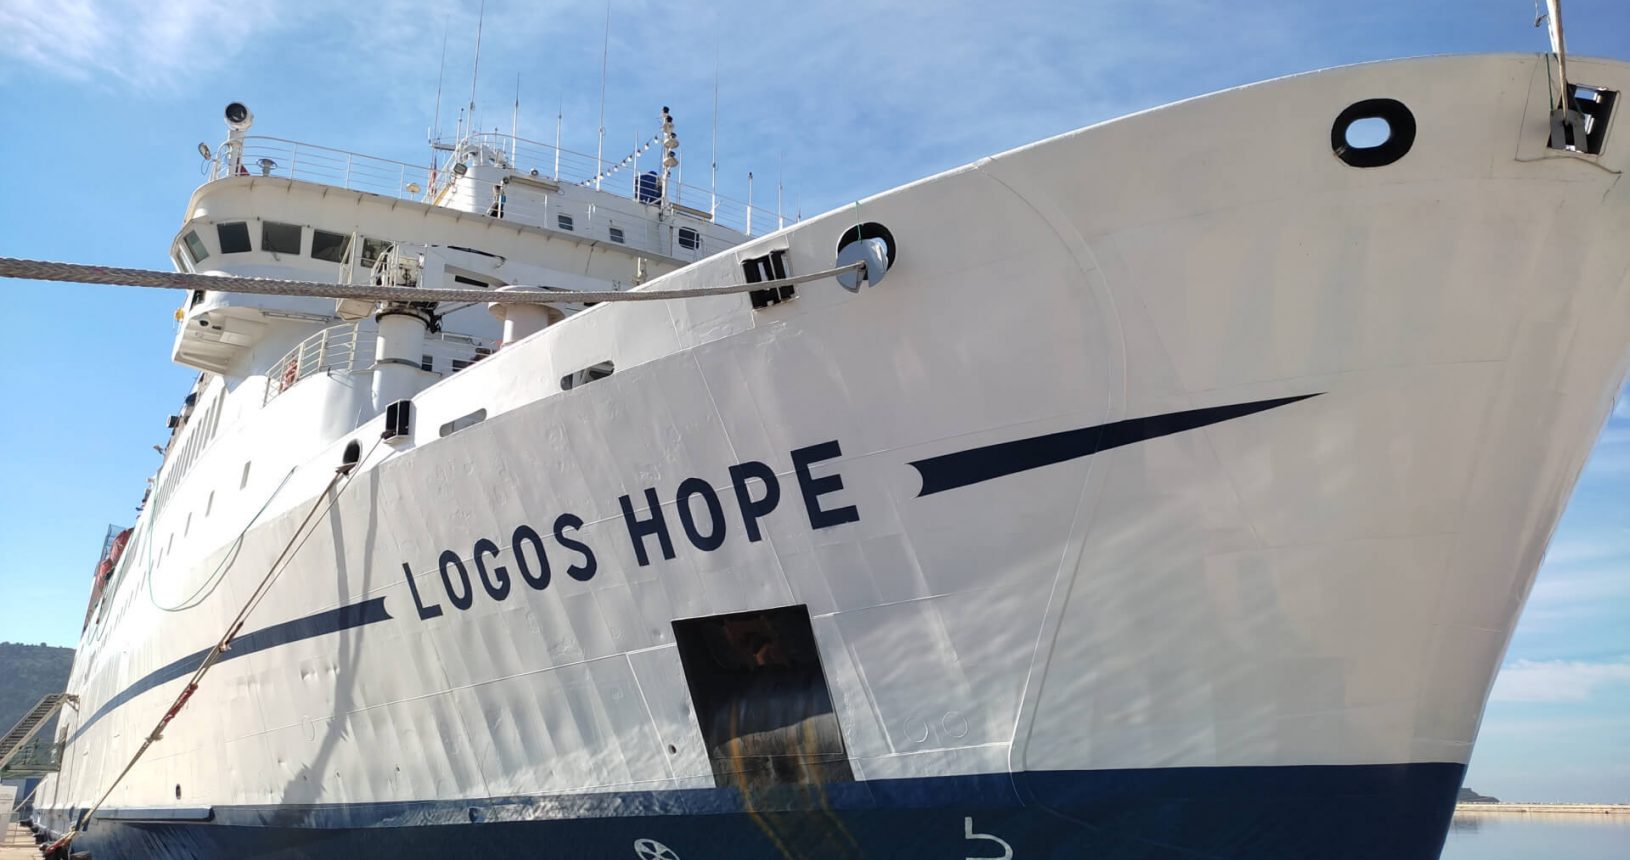 Logos Hope ship in Bar port